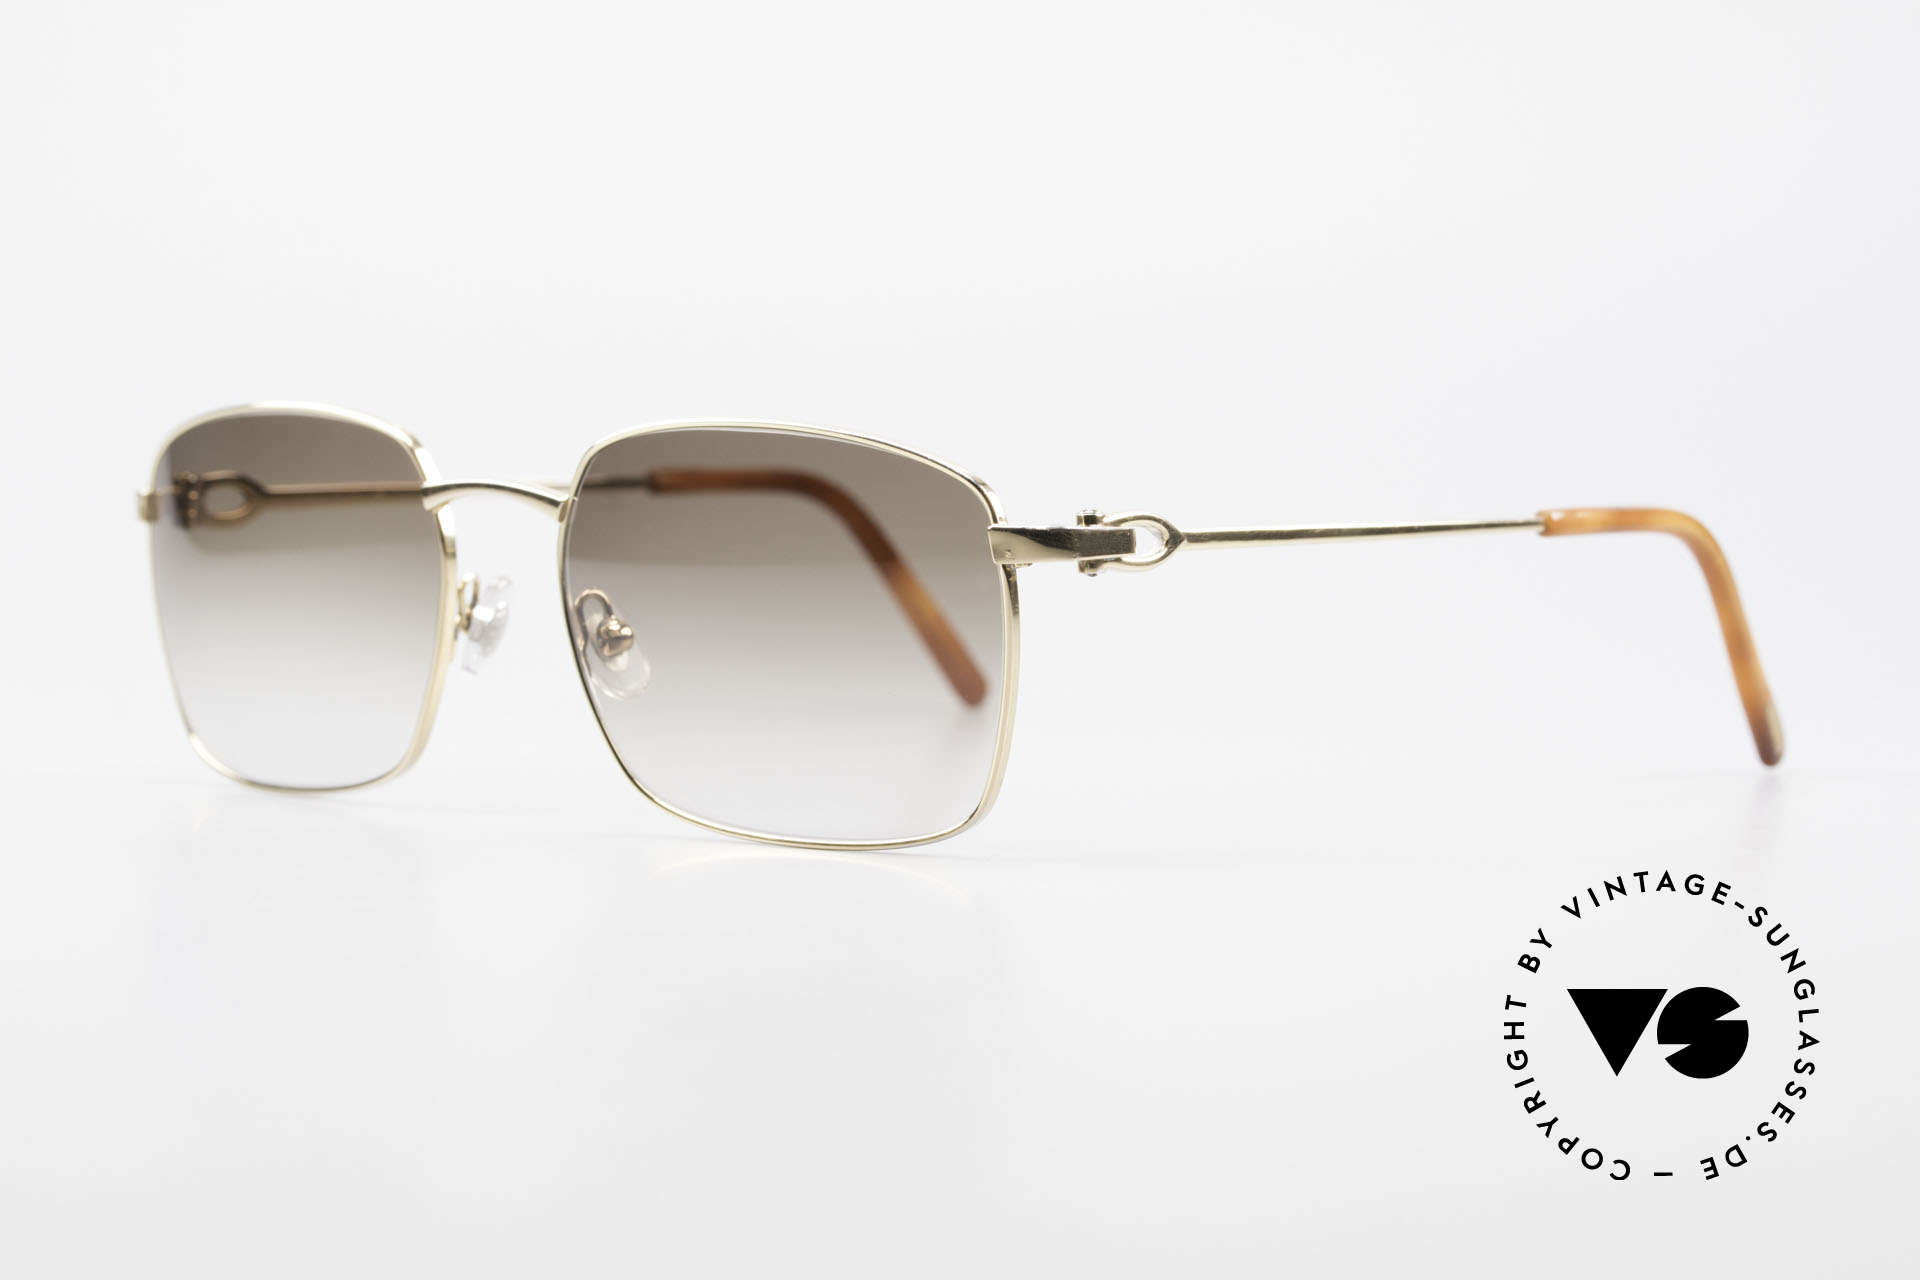 Sunglasses Cartier C Decor Metal Classic Men S Luxury Glasses